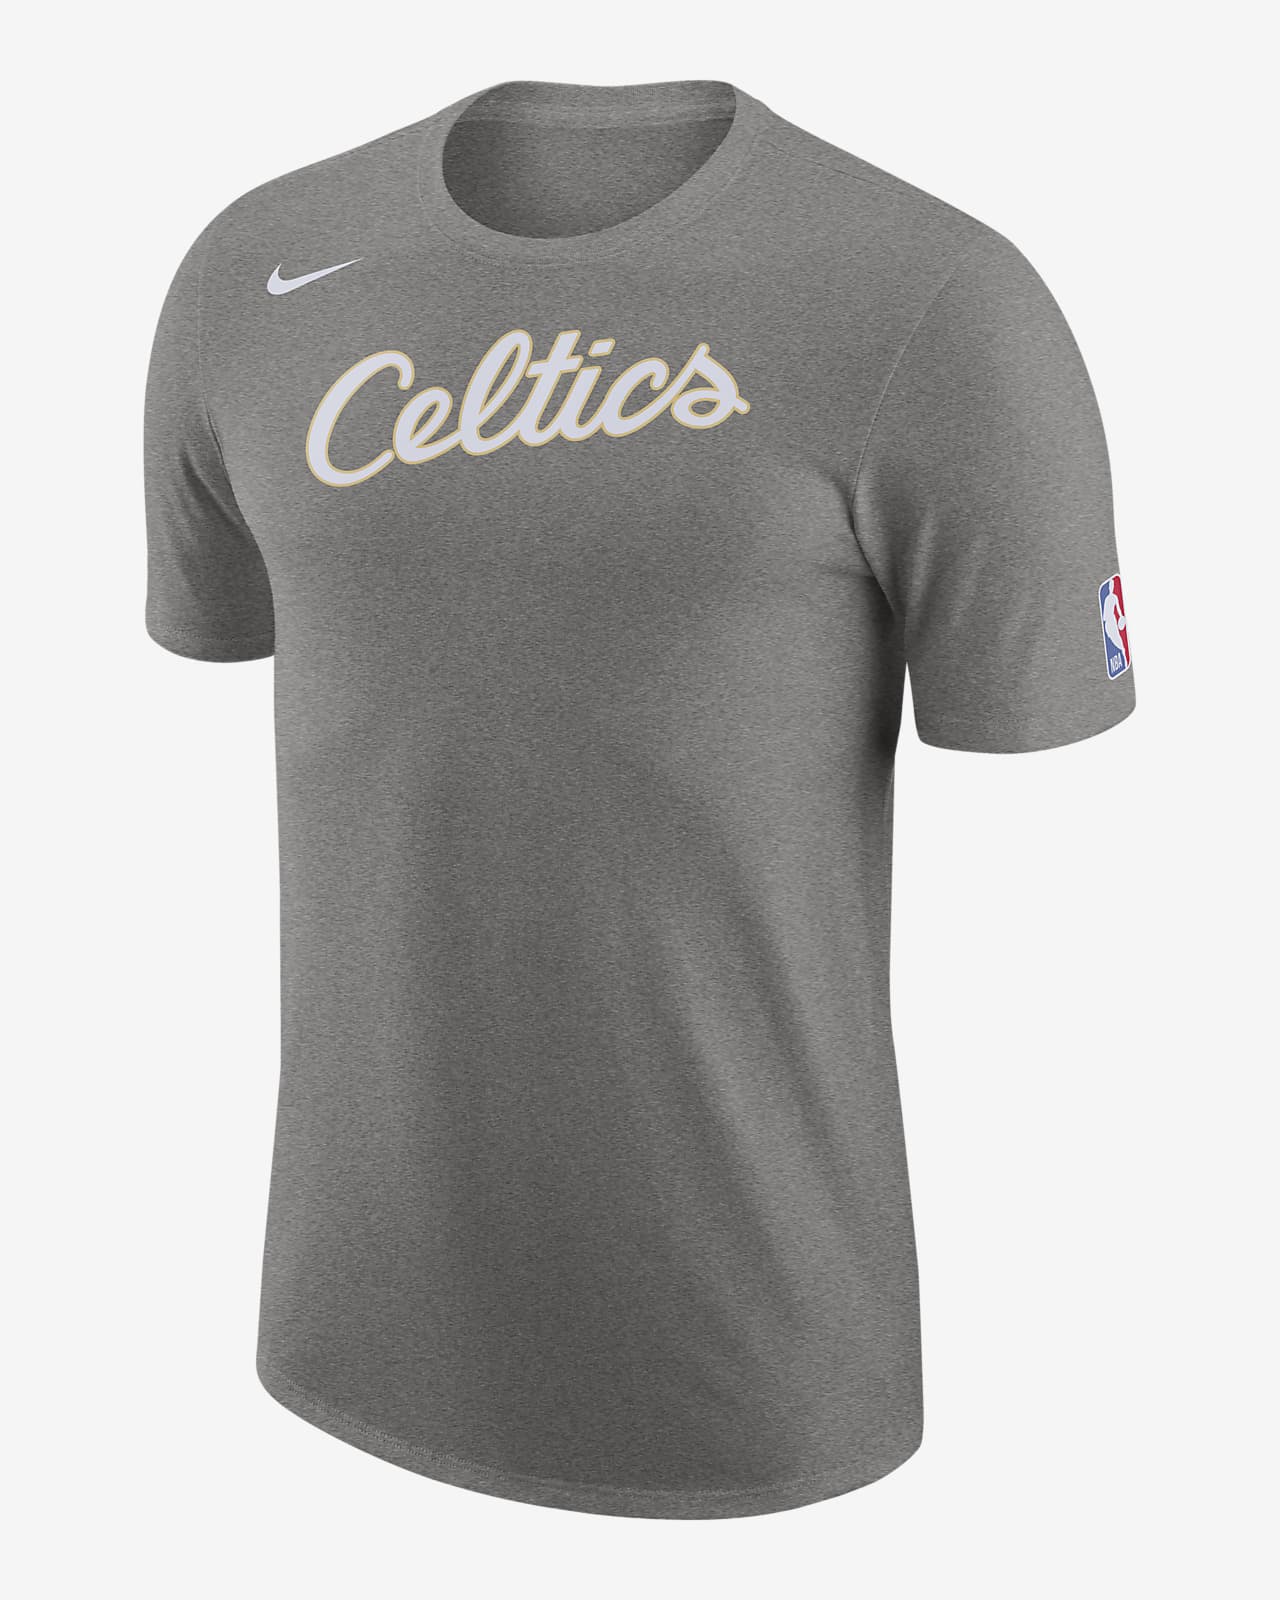 celtics city shirt